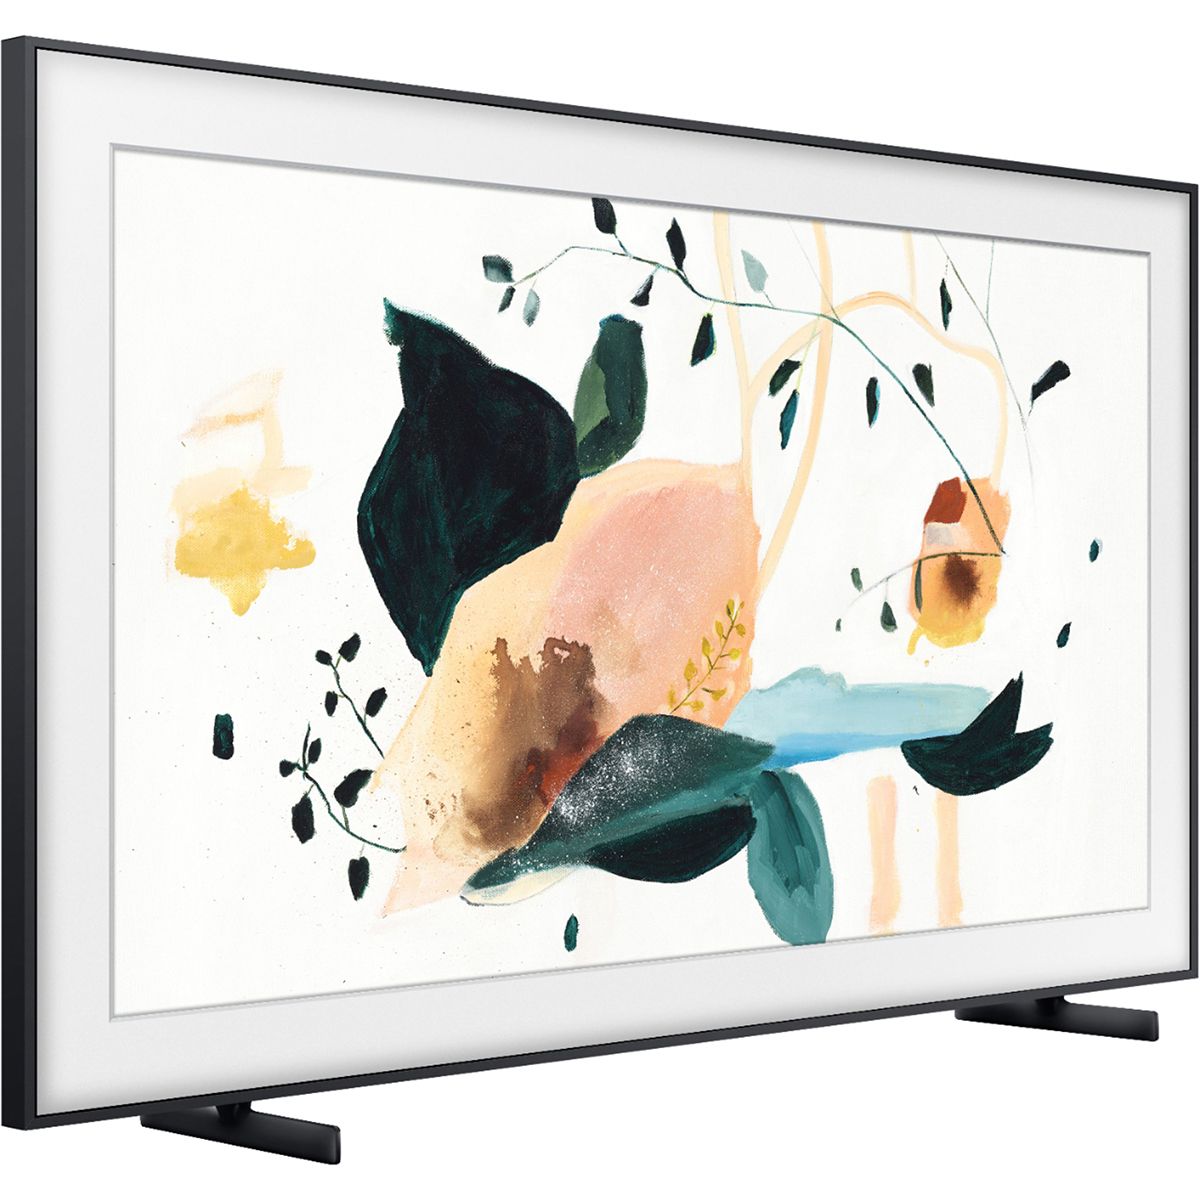 Samsung 75" Class The Frame QLED 4K UHD HDR Smart TV (2020)